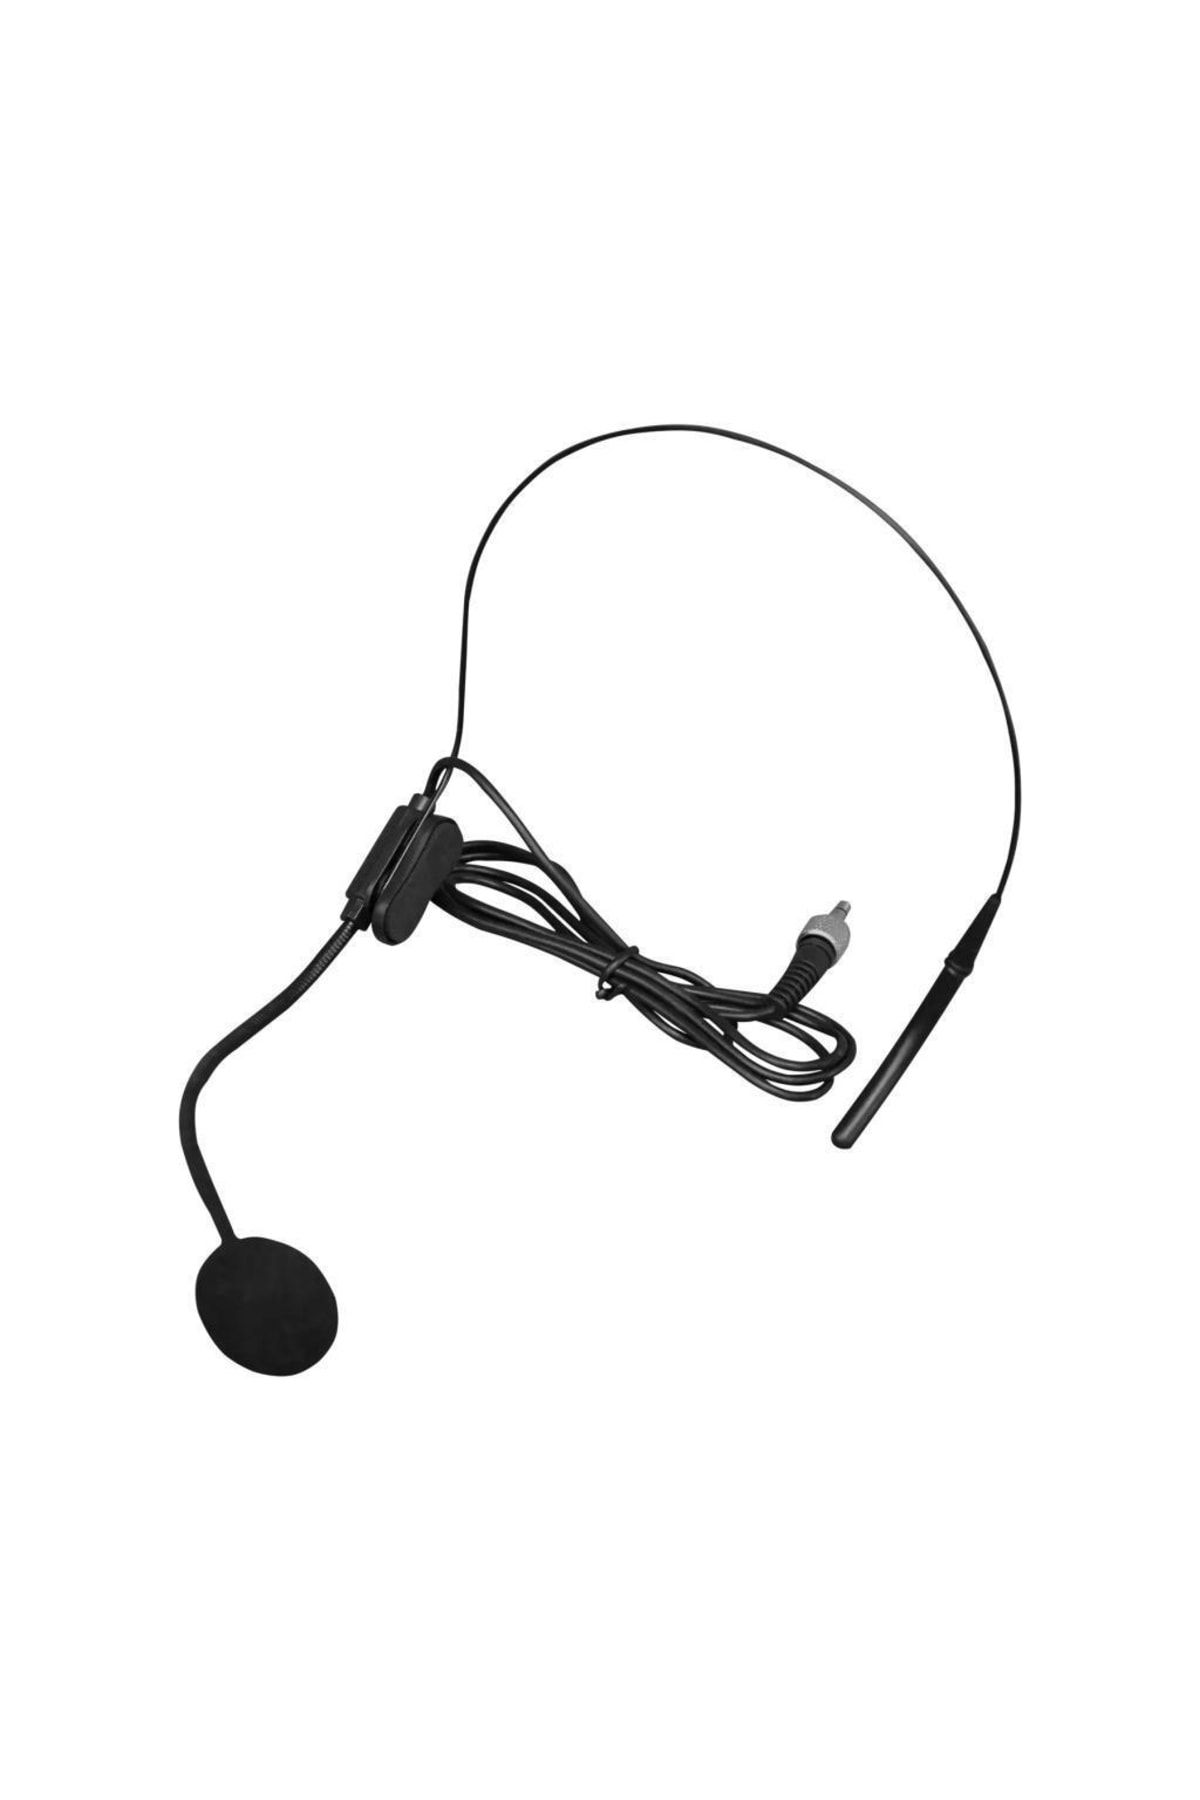 Mito Hs-b01 Kablolu Kafa Headset Mikrofon